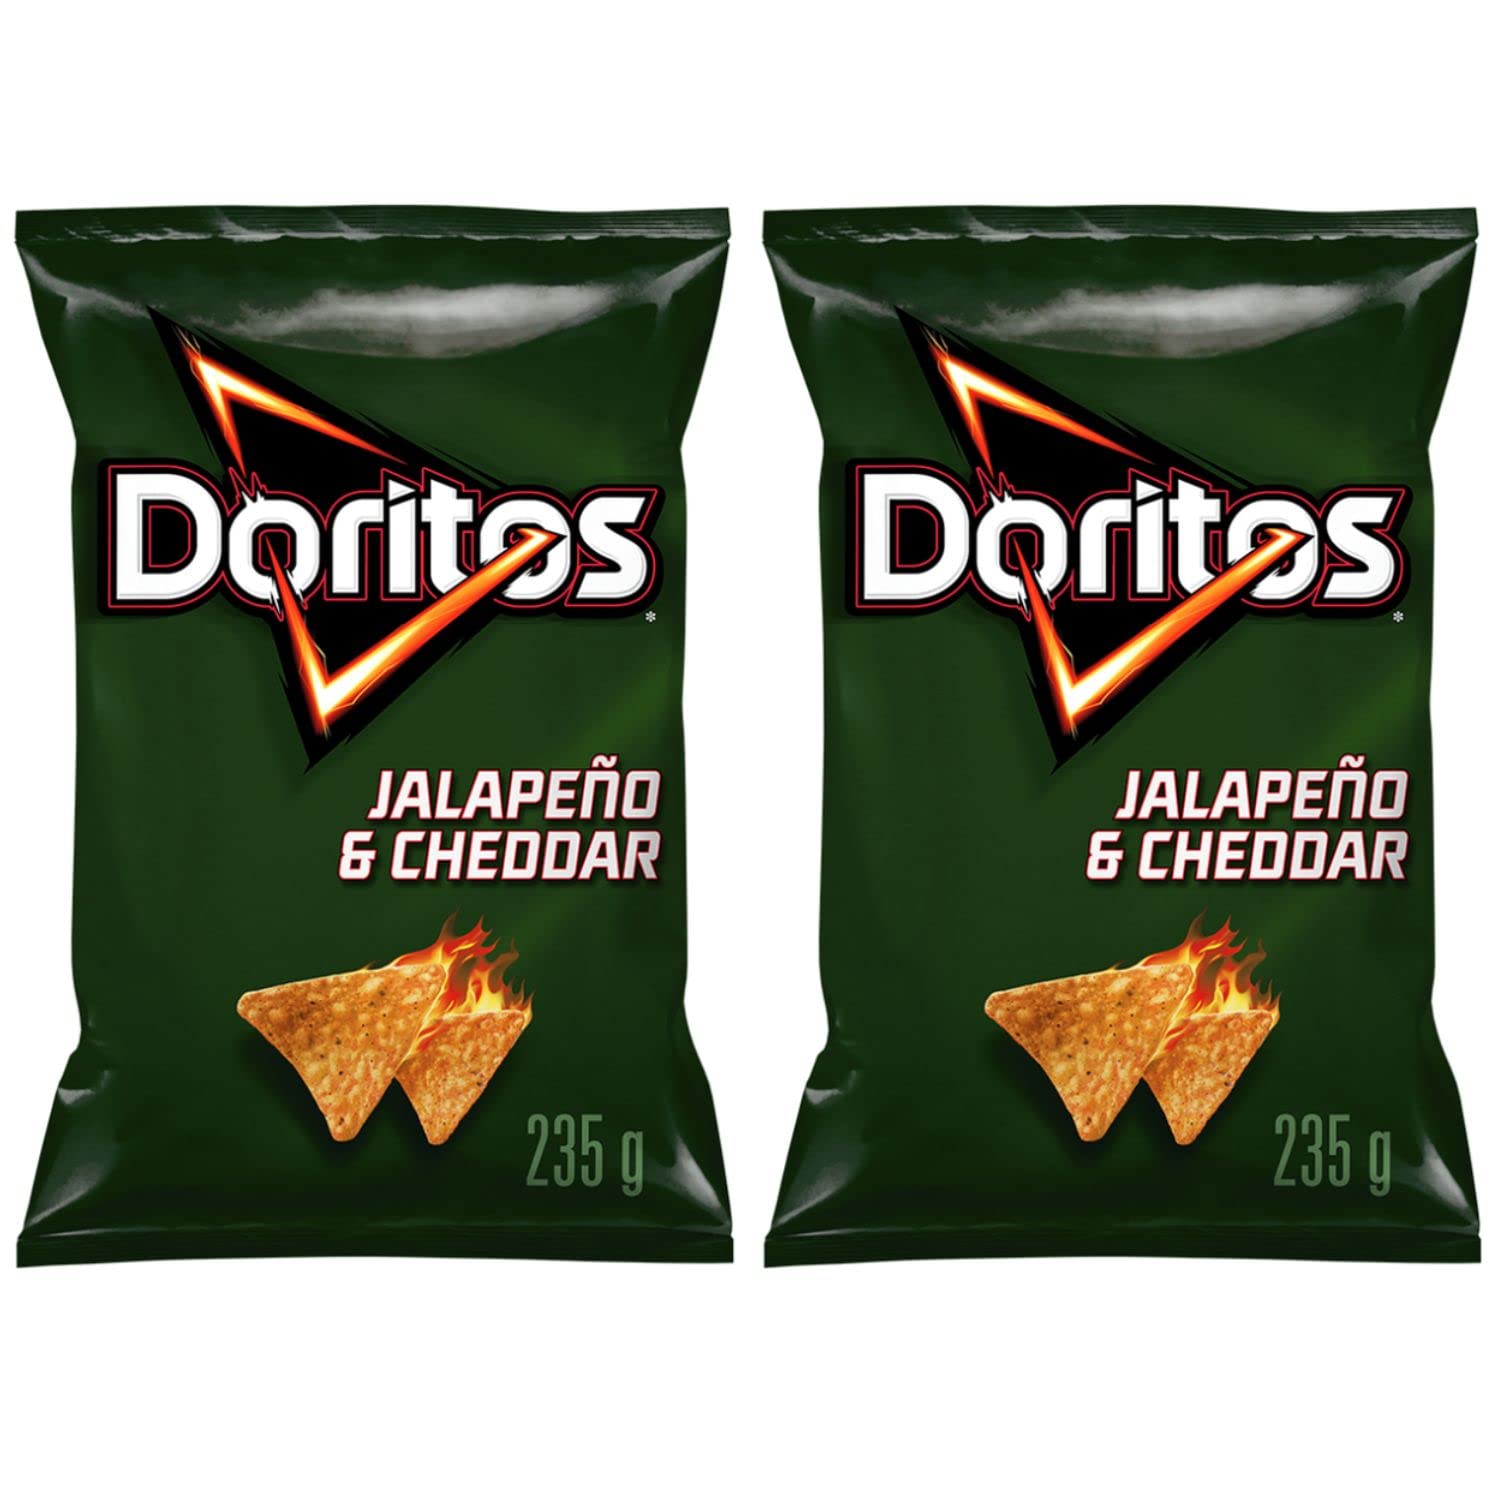 Doritos Jalapeno and Cheddar Tortilla Chips pack of 2